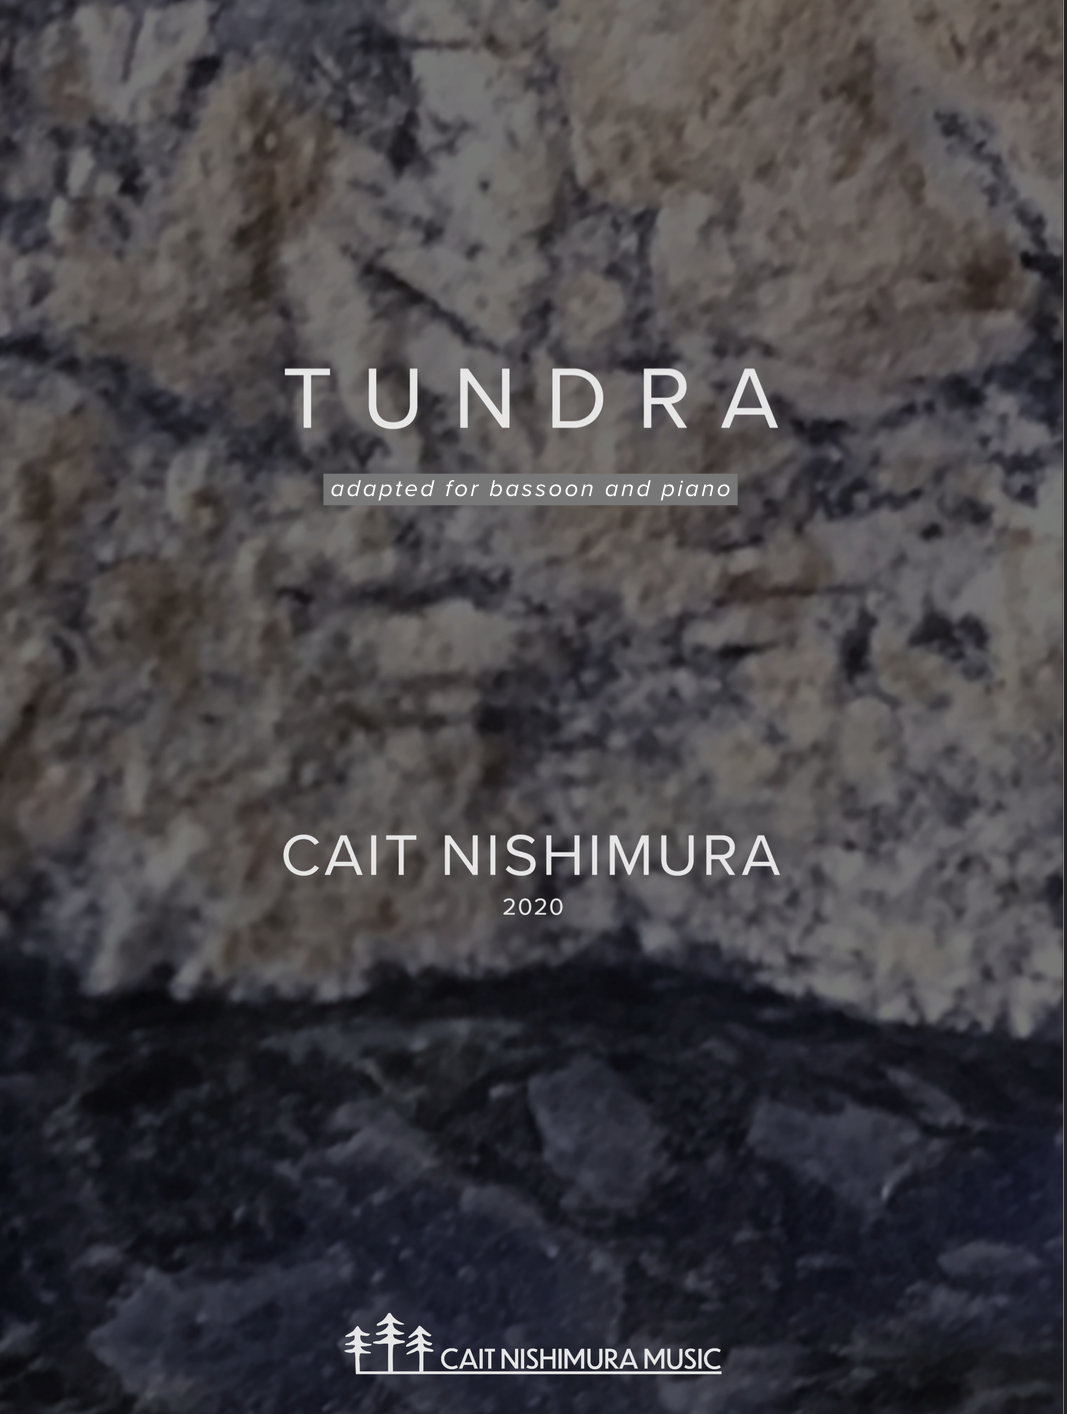 Tundra (Bassoon Version) by Cait Nishimura